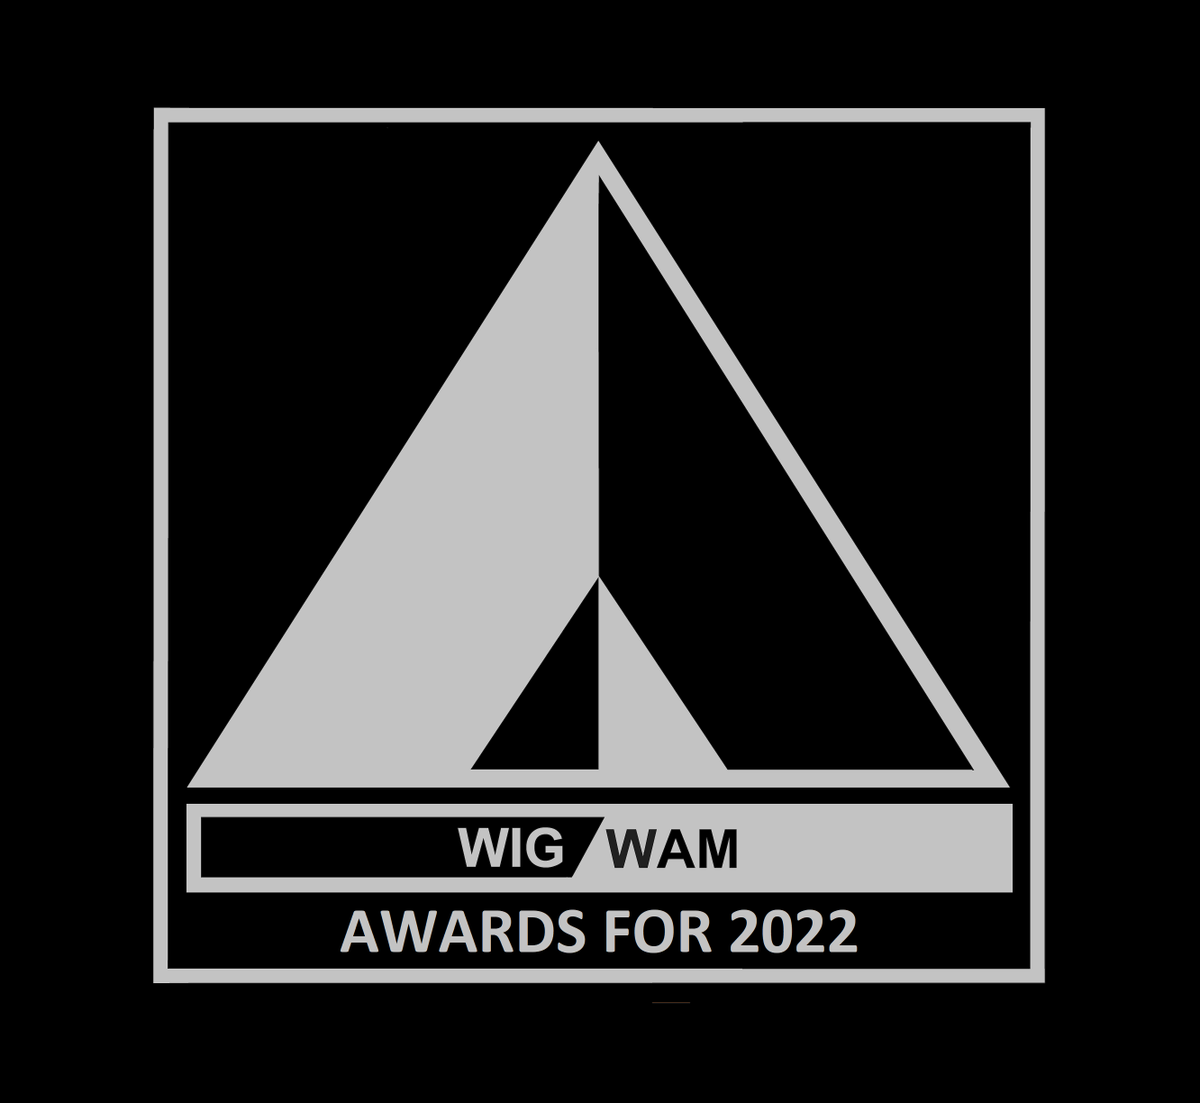 WIGWAM AWARDS: Hear the Best Song nominees -Wednesday 5pm UK, 6pm CET (Europe), 9pm EST (Americas). Click on radiowigwam.co.uk @psyenceuk @Emma_Scott @blackwolftrap @between_daze @PaytronSaint @louis_shakes @VANTEband1 @outsideinnz @sonic_whip @screamsofyouth @TIWNmedia